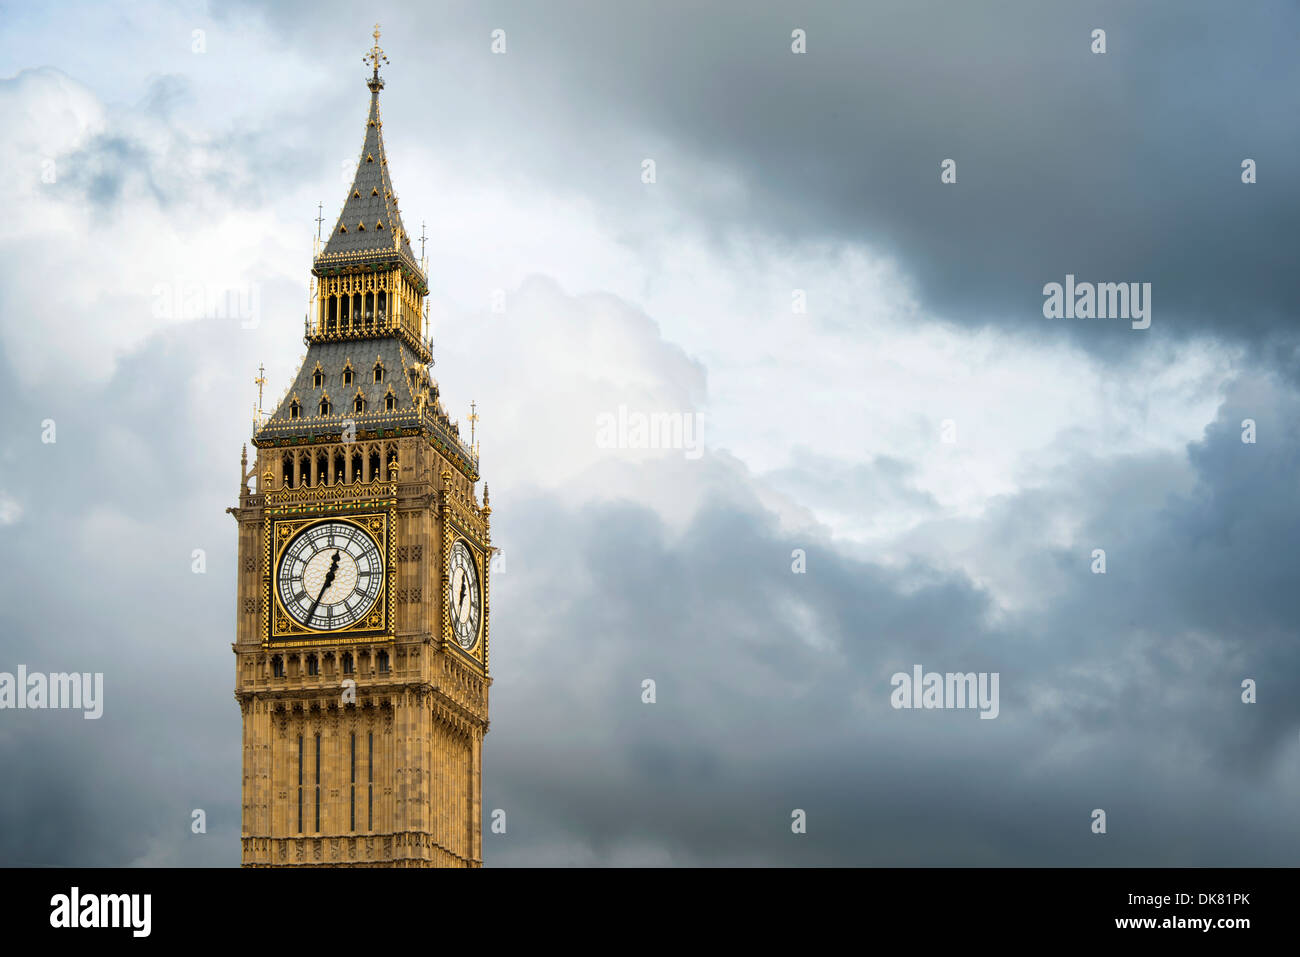 Big Ben London. Dramatic cloudy sky background Stock Photo